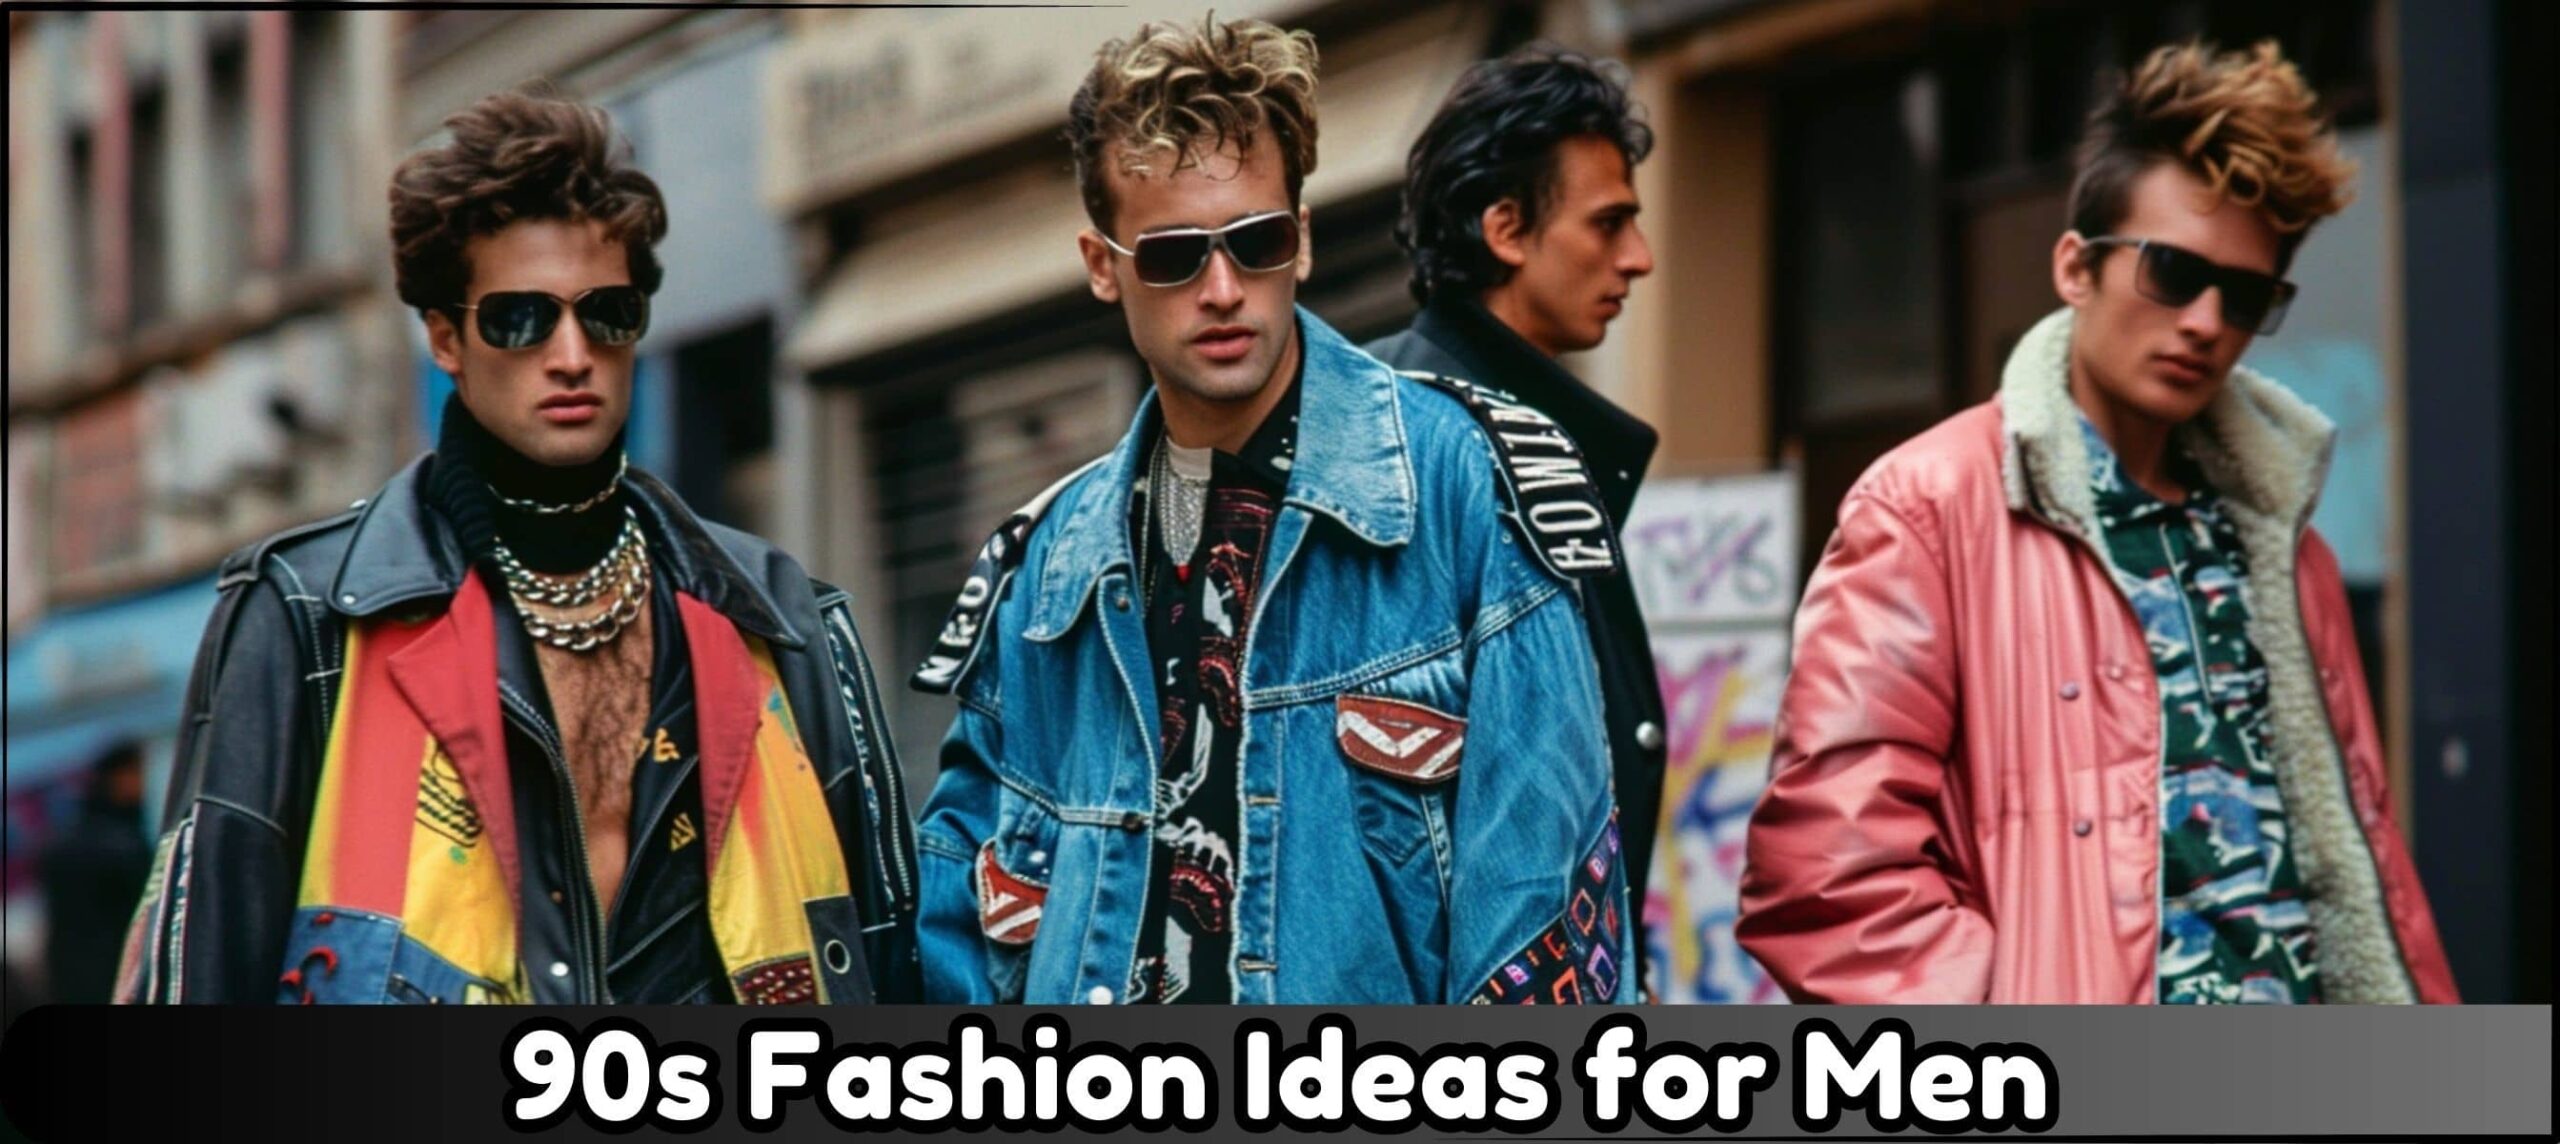 90s Fashion Ideas for Men